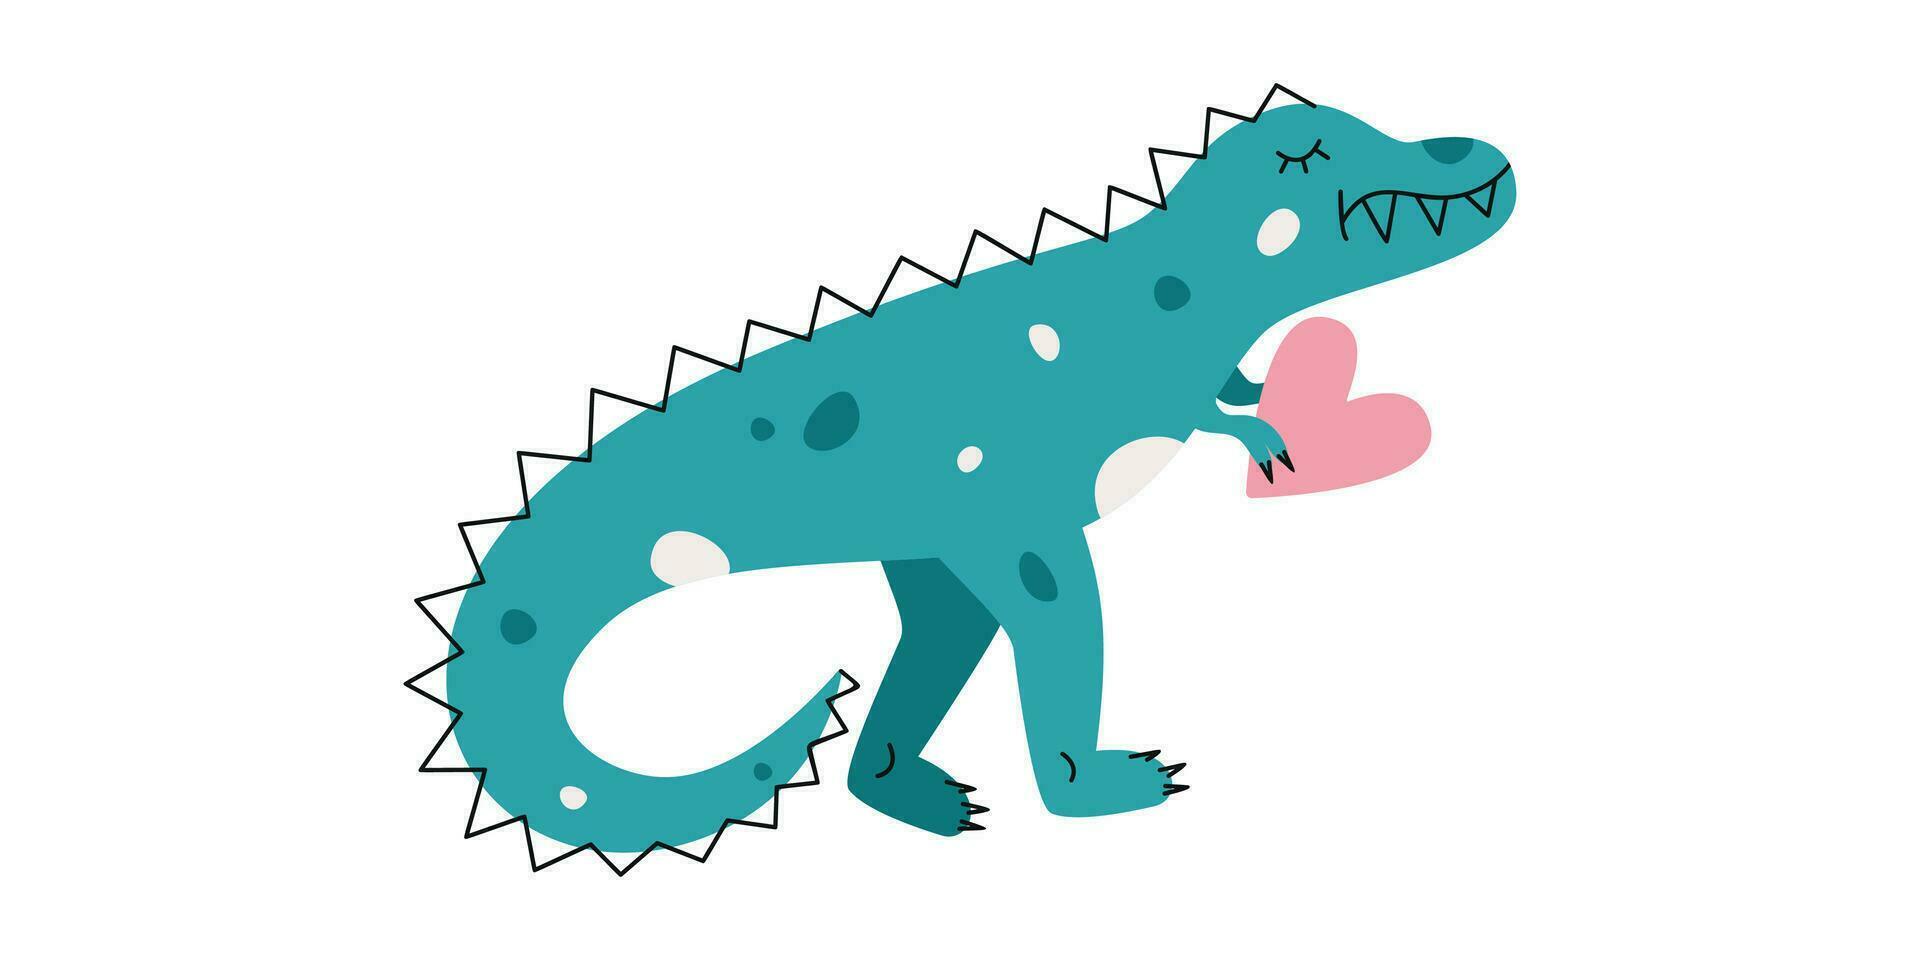 plano mano dibujado vector ilustración de tiranosaurio dinosaurio